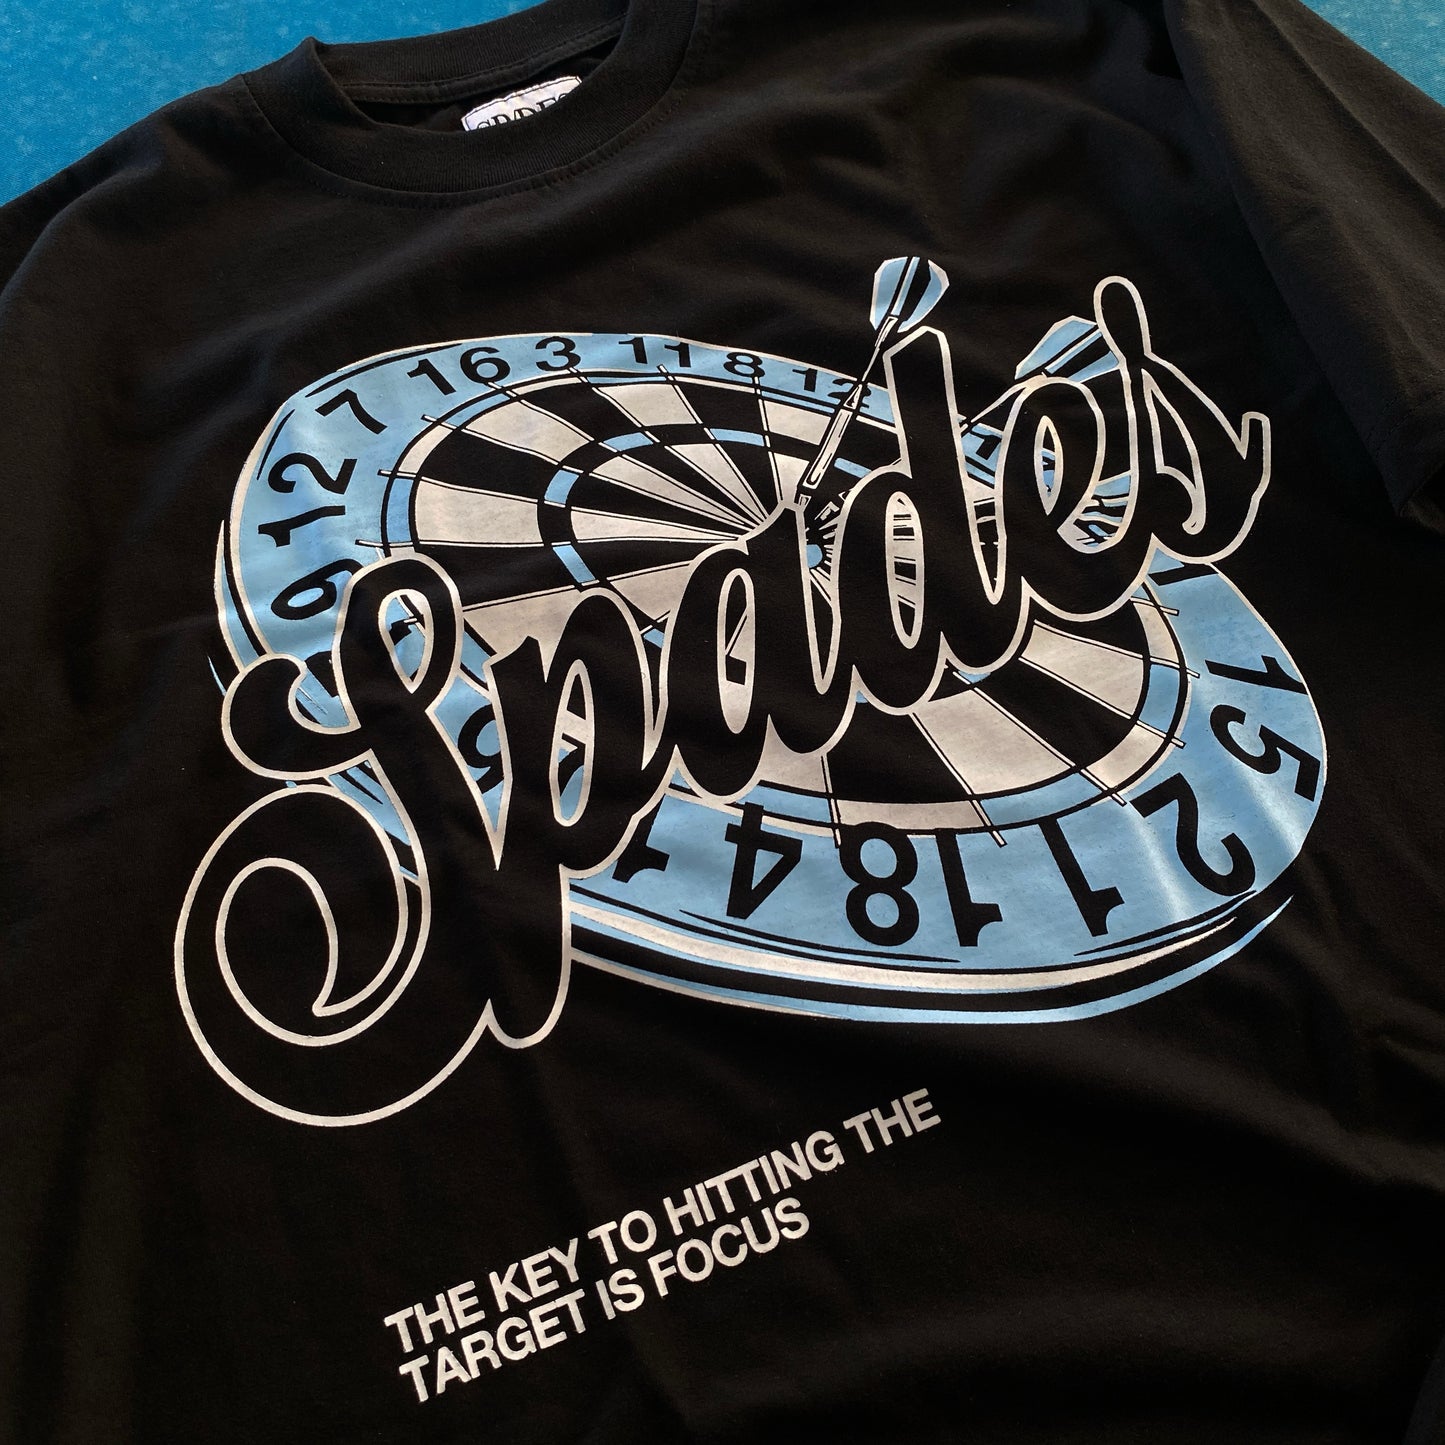 Spades Bullseye Black T-shirt